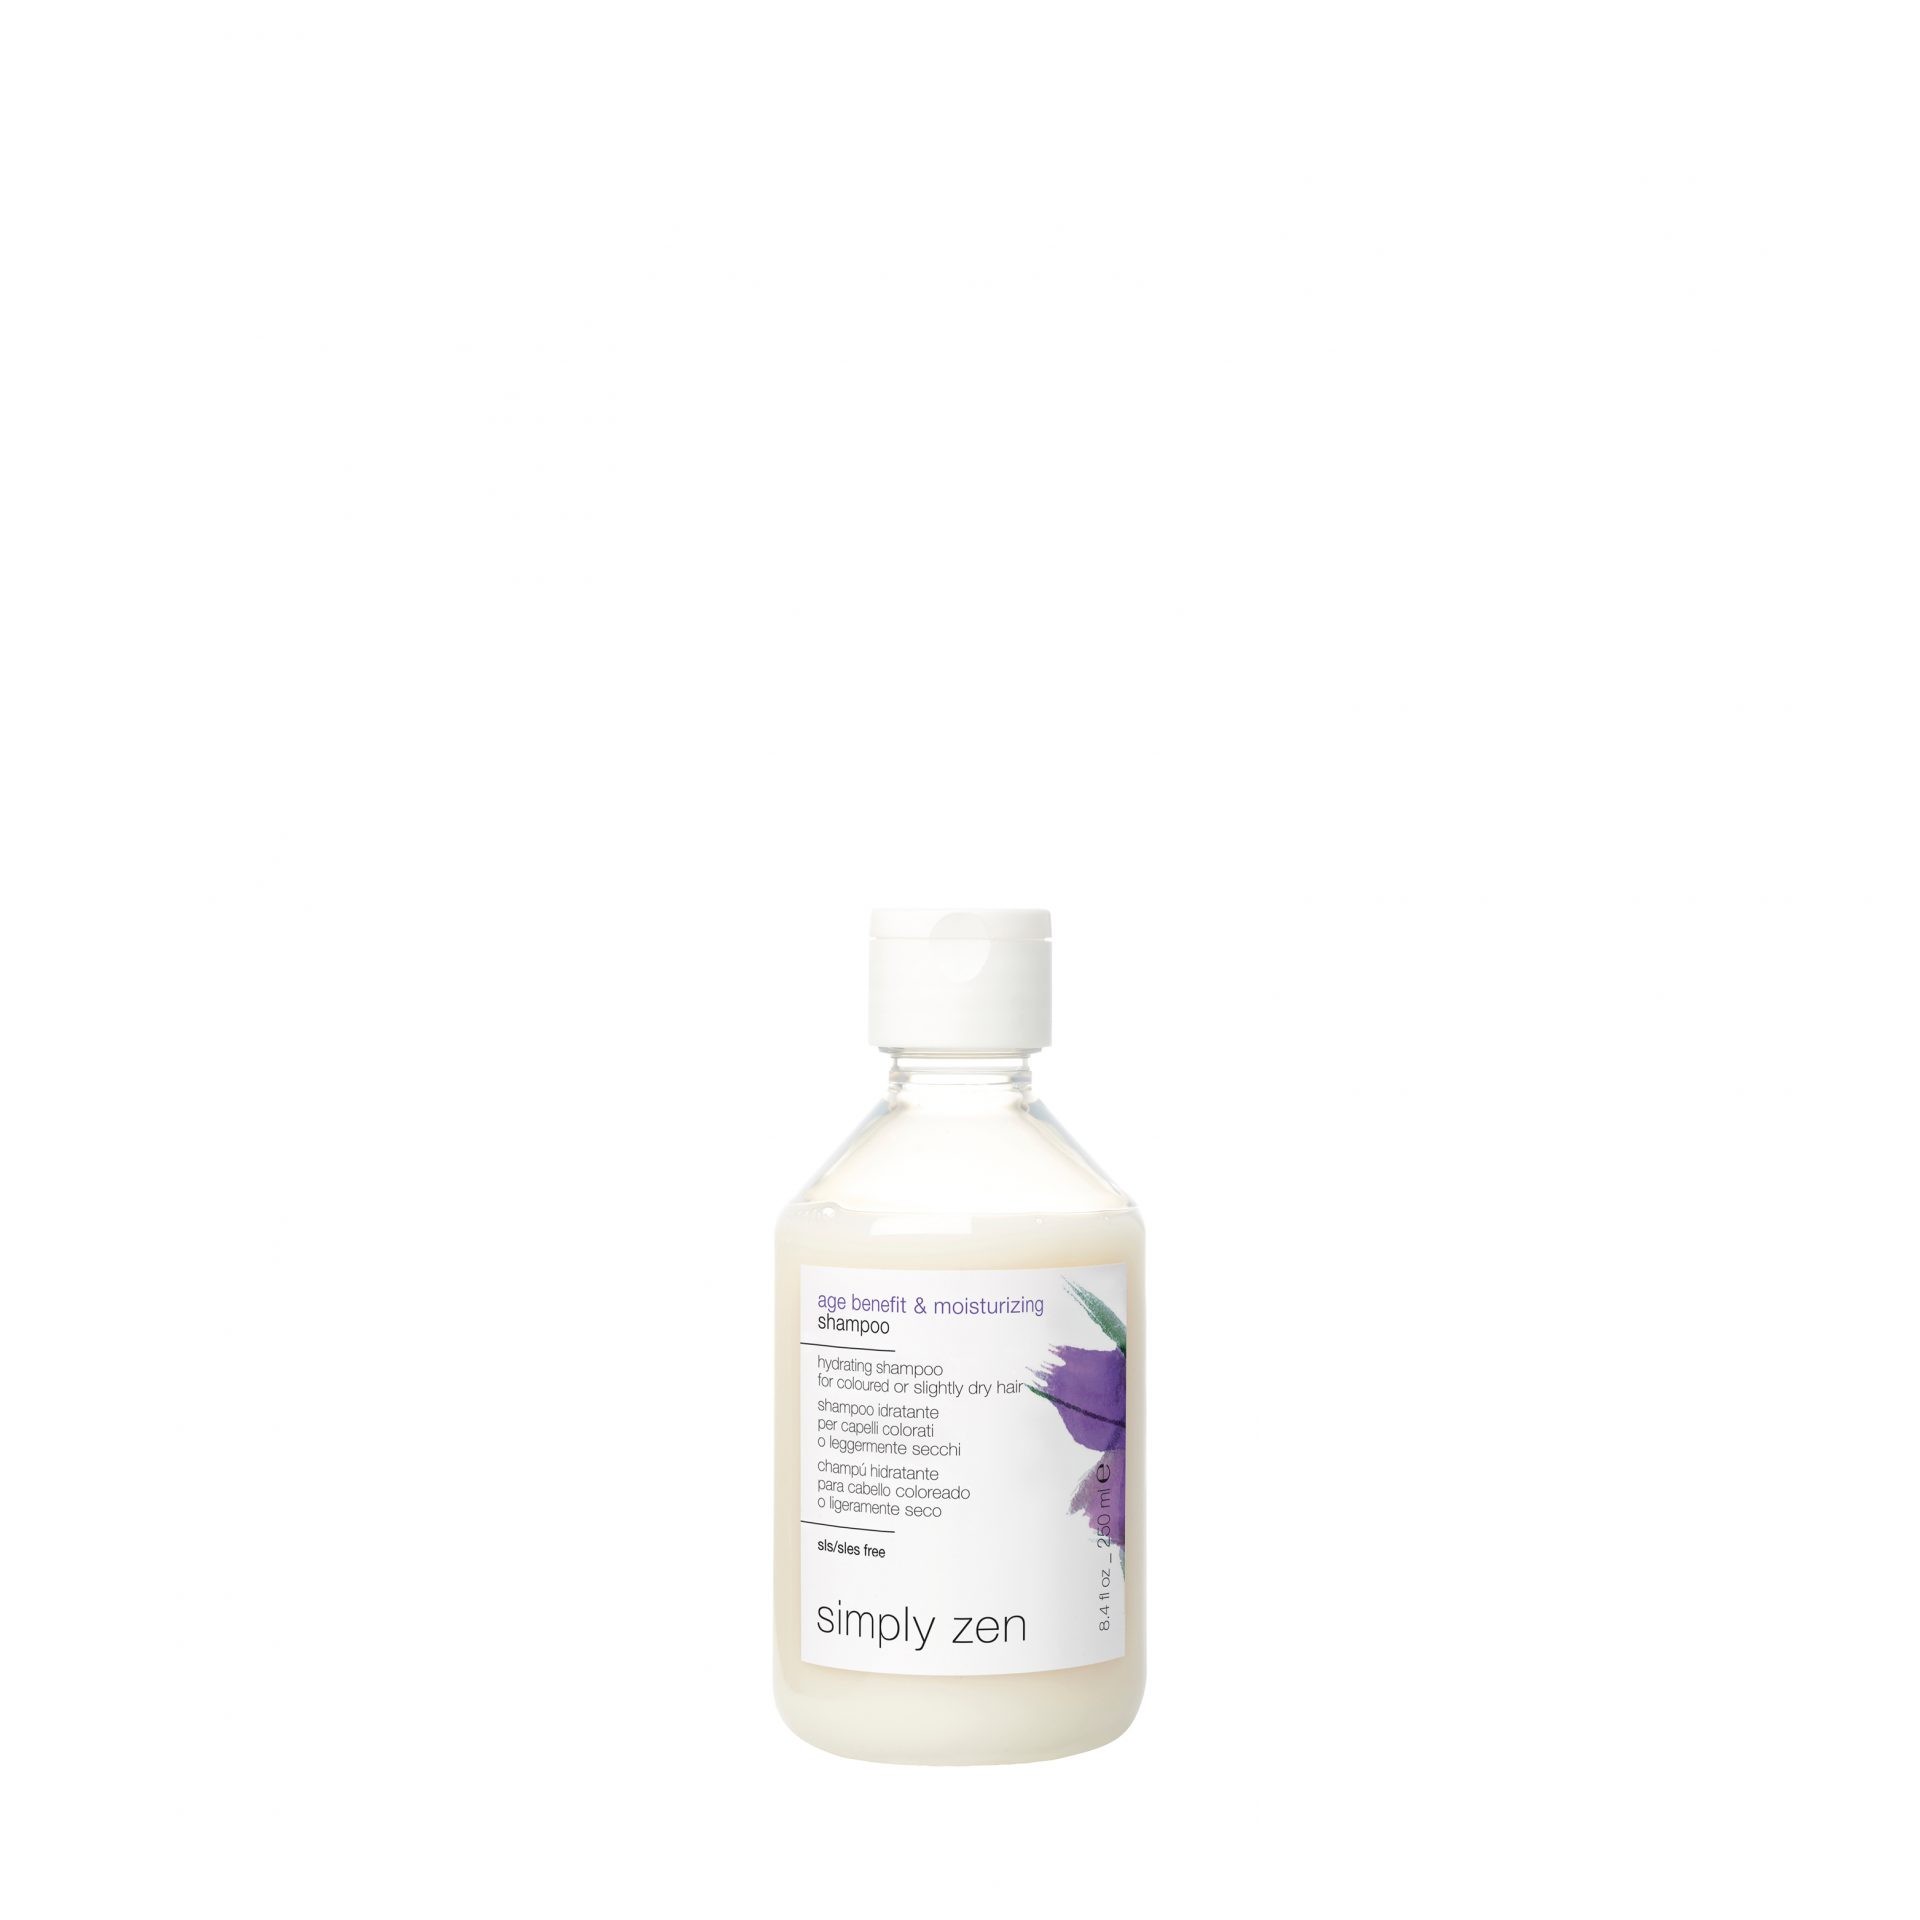 27 IMG SZ singole prodotti 1500x1500px 72 DPI age benefit and moisturizing shampoo